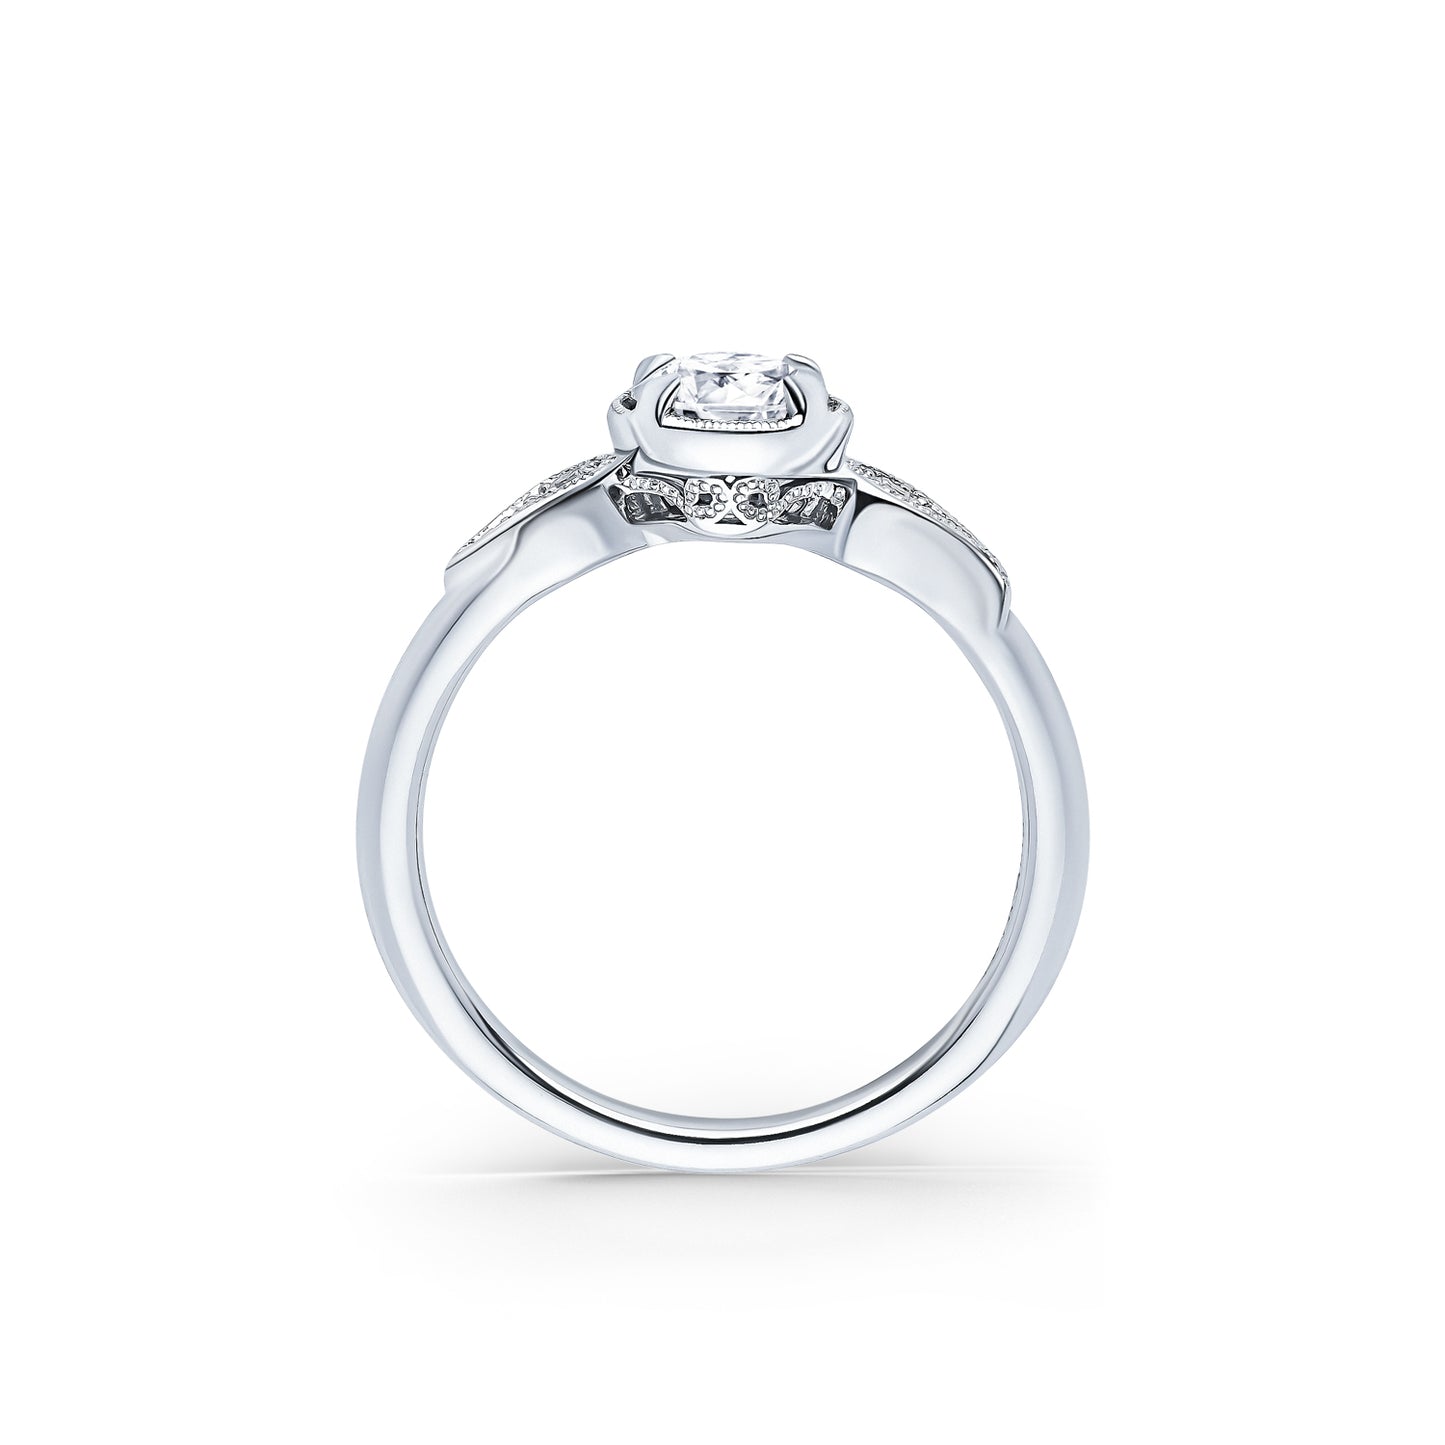 Paisley Floral Milgrain Diamond Engagement Ring